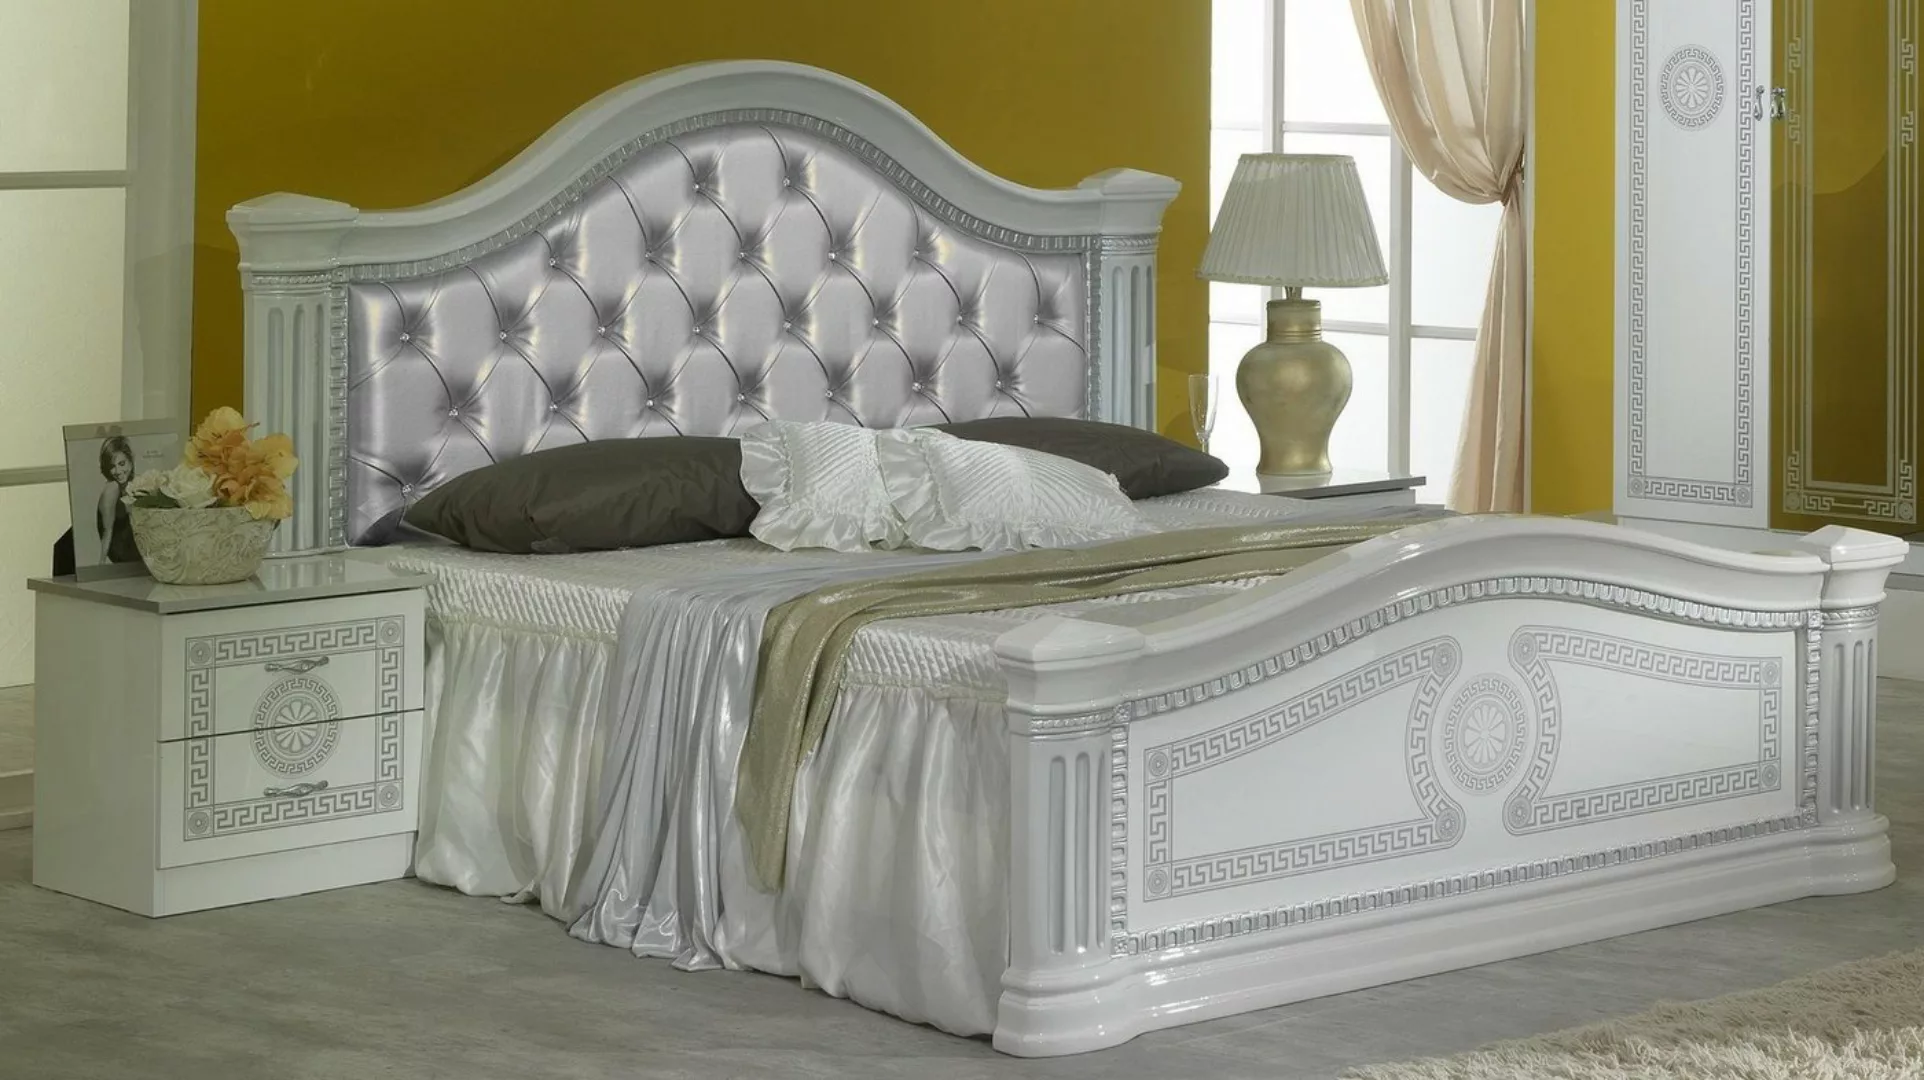 JVmoebel Bett Bett Schlafzimmer Betten Chesterfield Textil Leder Hotel Luxu günstig online kaufen